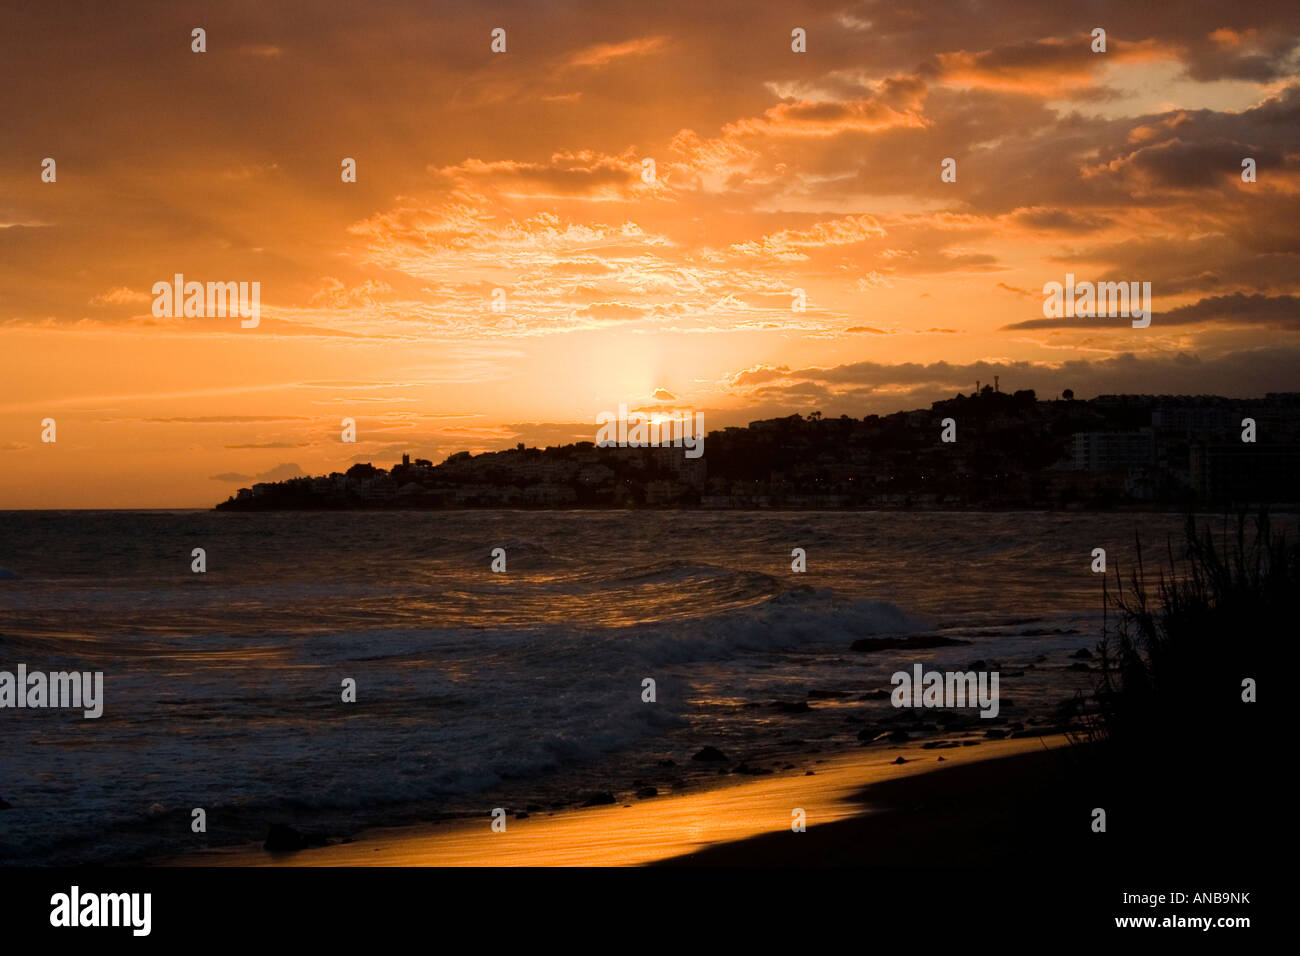 Fuengirola Malaga Provinz Costa del Sol Spanien Sonnenuntergang über Meer Stockfoto